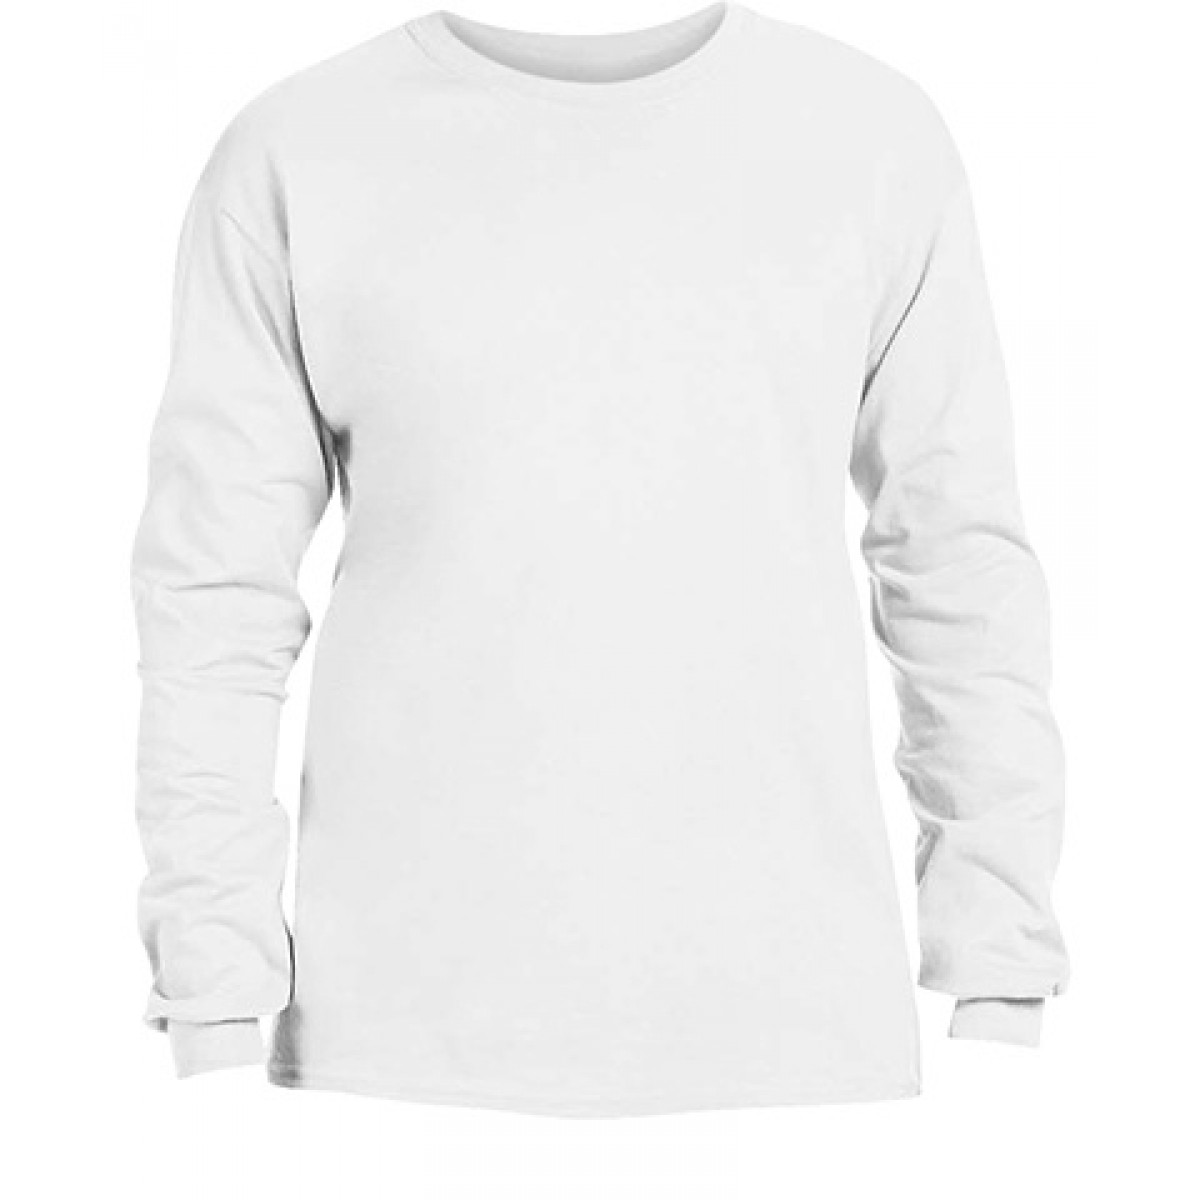 Adidas Long Sleeve T-shirt With Adidas logo-White-S